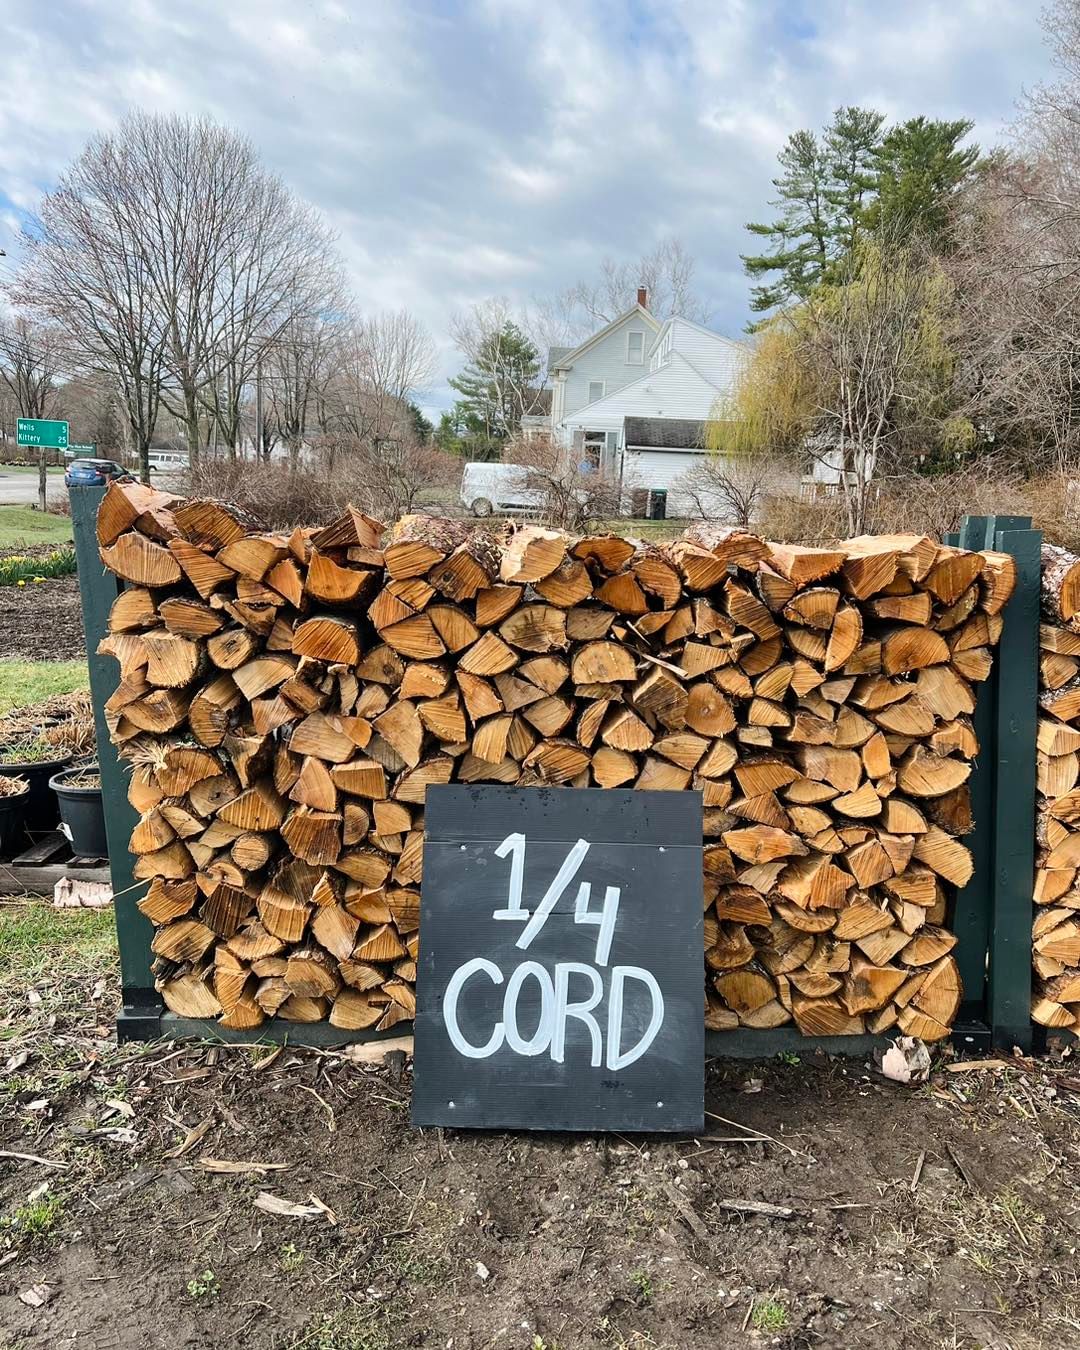 1/4 cord firewood